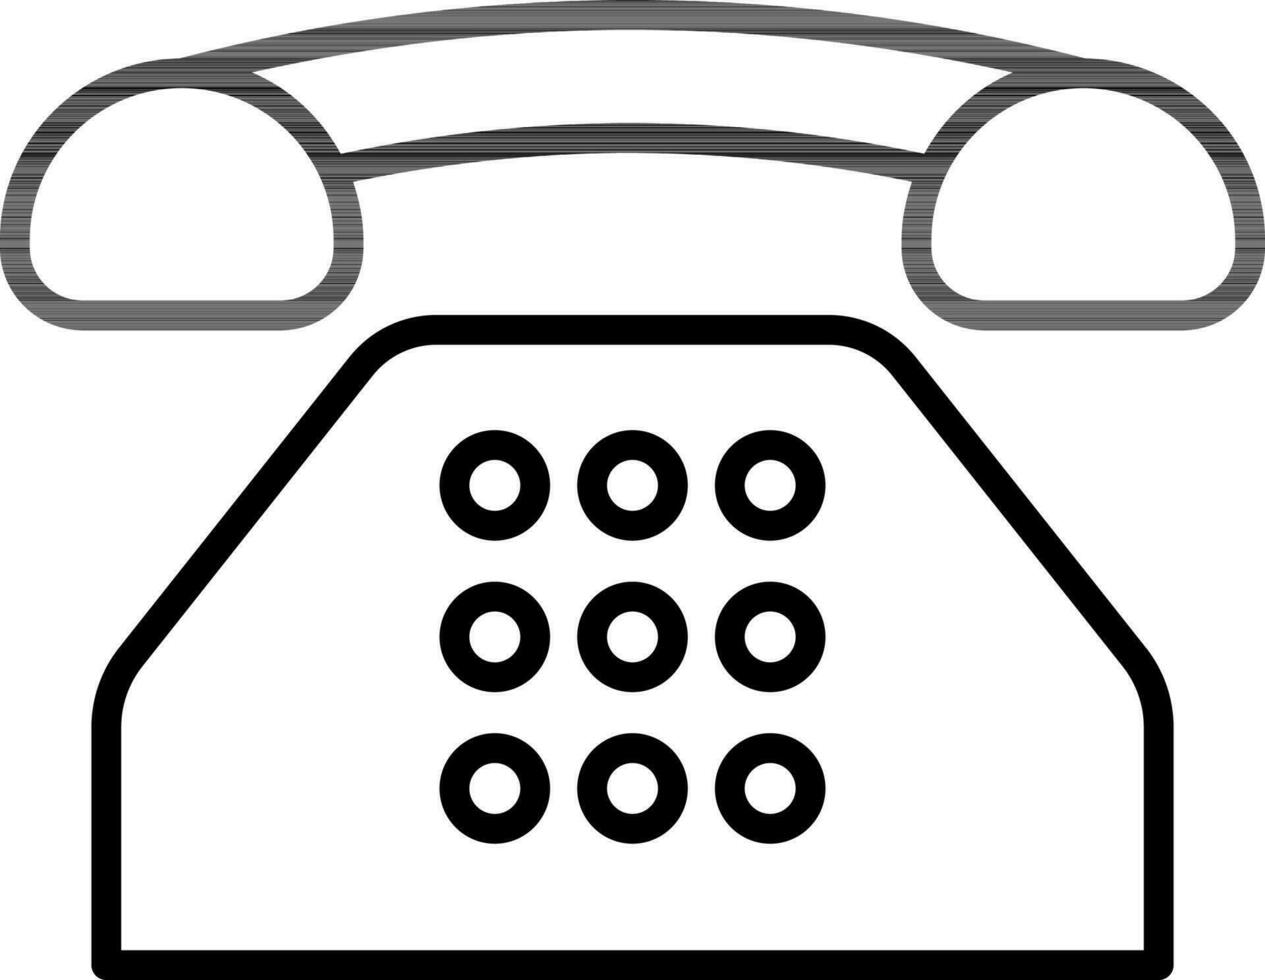 Telephone Icon or Symbol in Black Line Art. vector